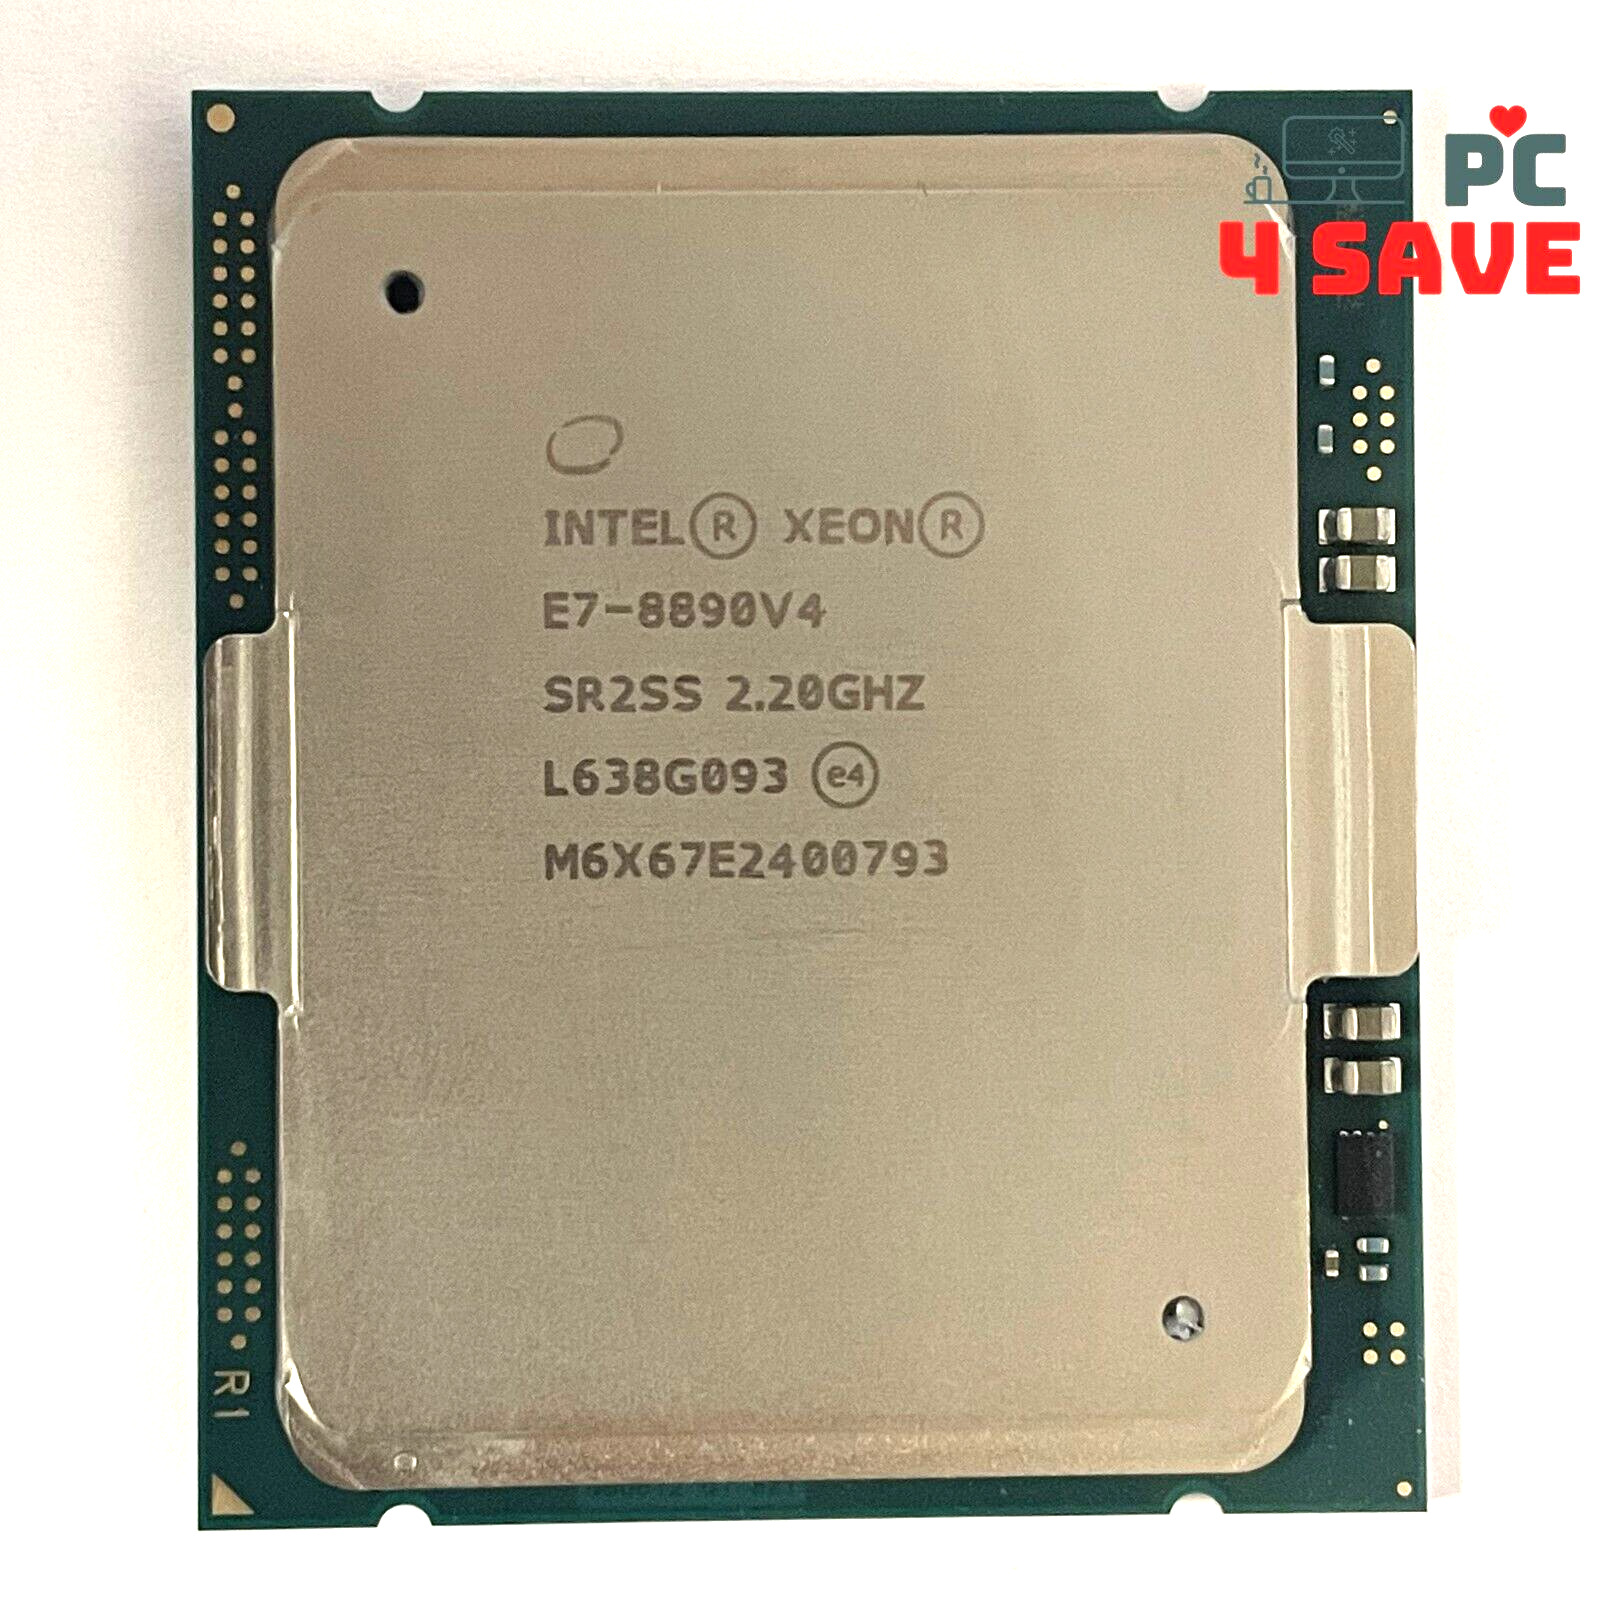 Intel Xeon E7-8890 V4 2.20GHz 24-Core 60MB LGA2011 Server CPU Processor SR2SS